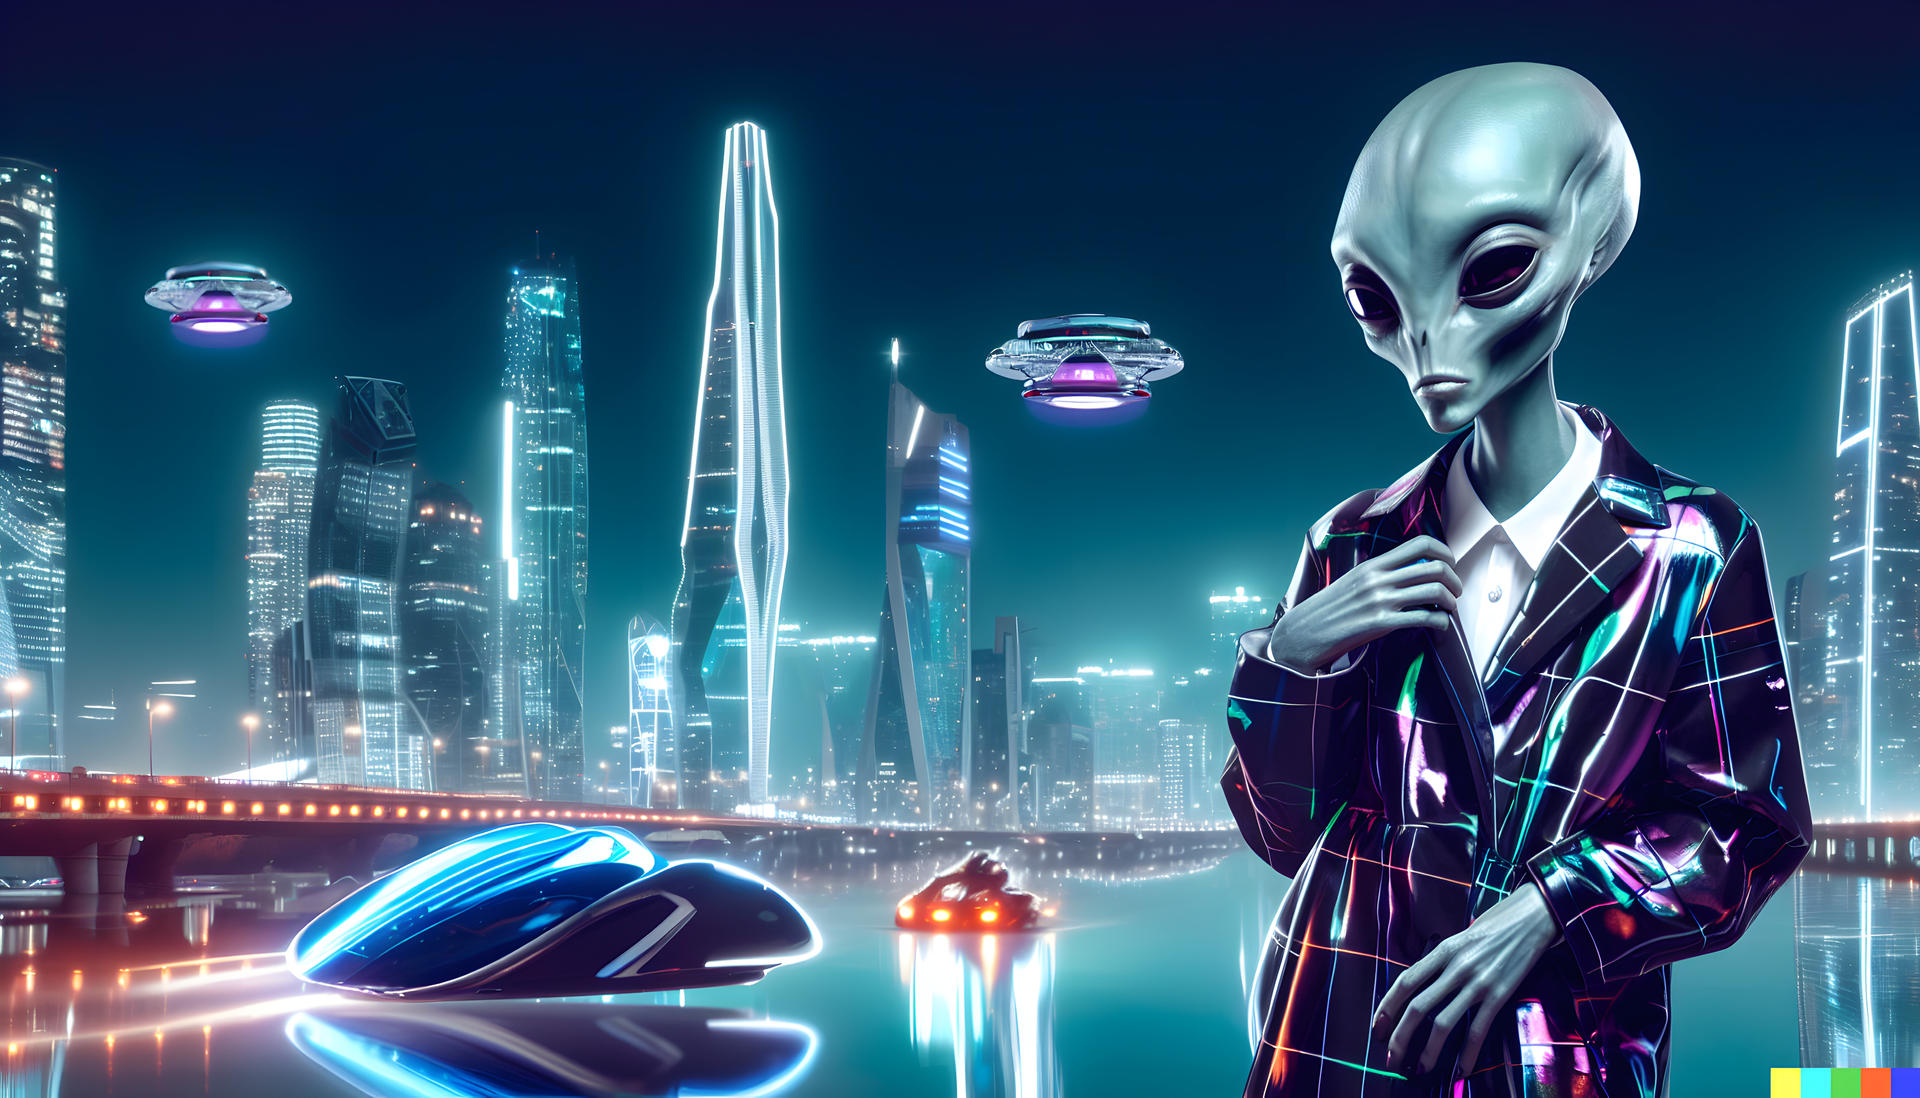 Alien Fashion City-realesrgan-x4plus by FutureRender on DeviantArt